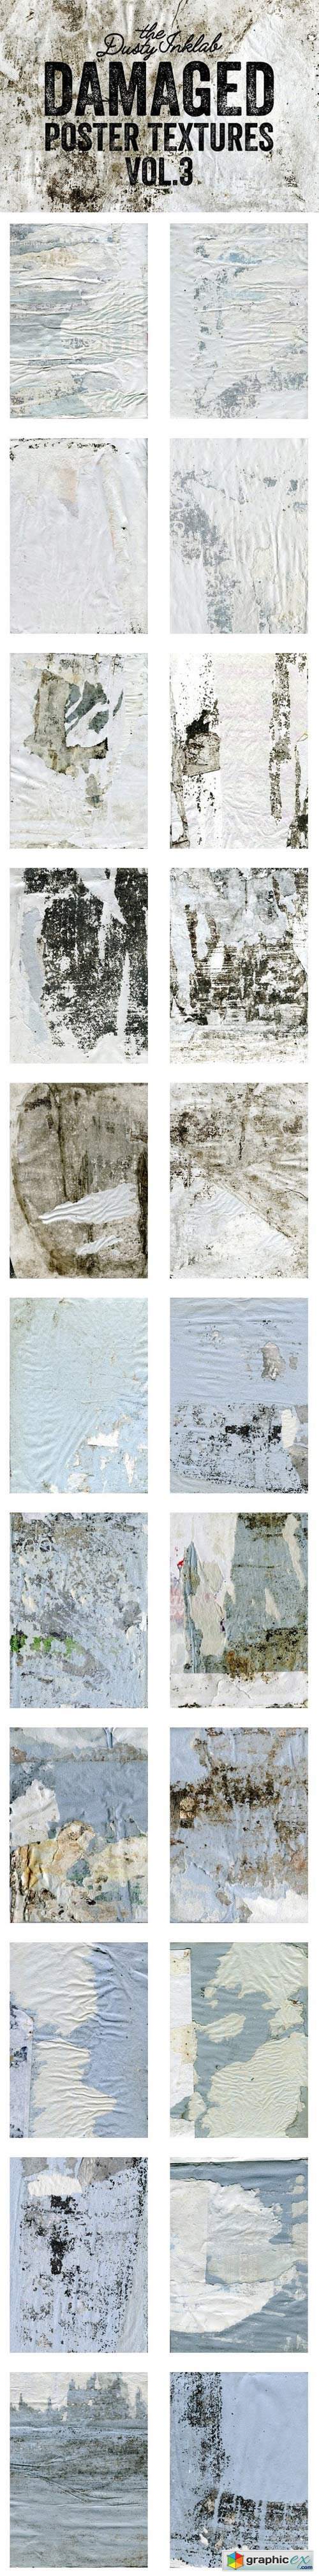 Damaged Poster Textures Vol. 3